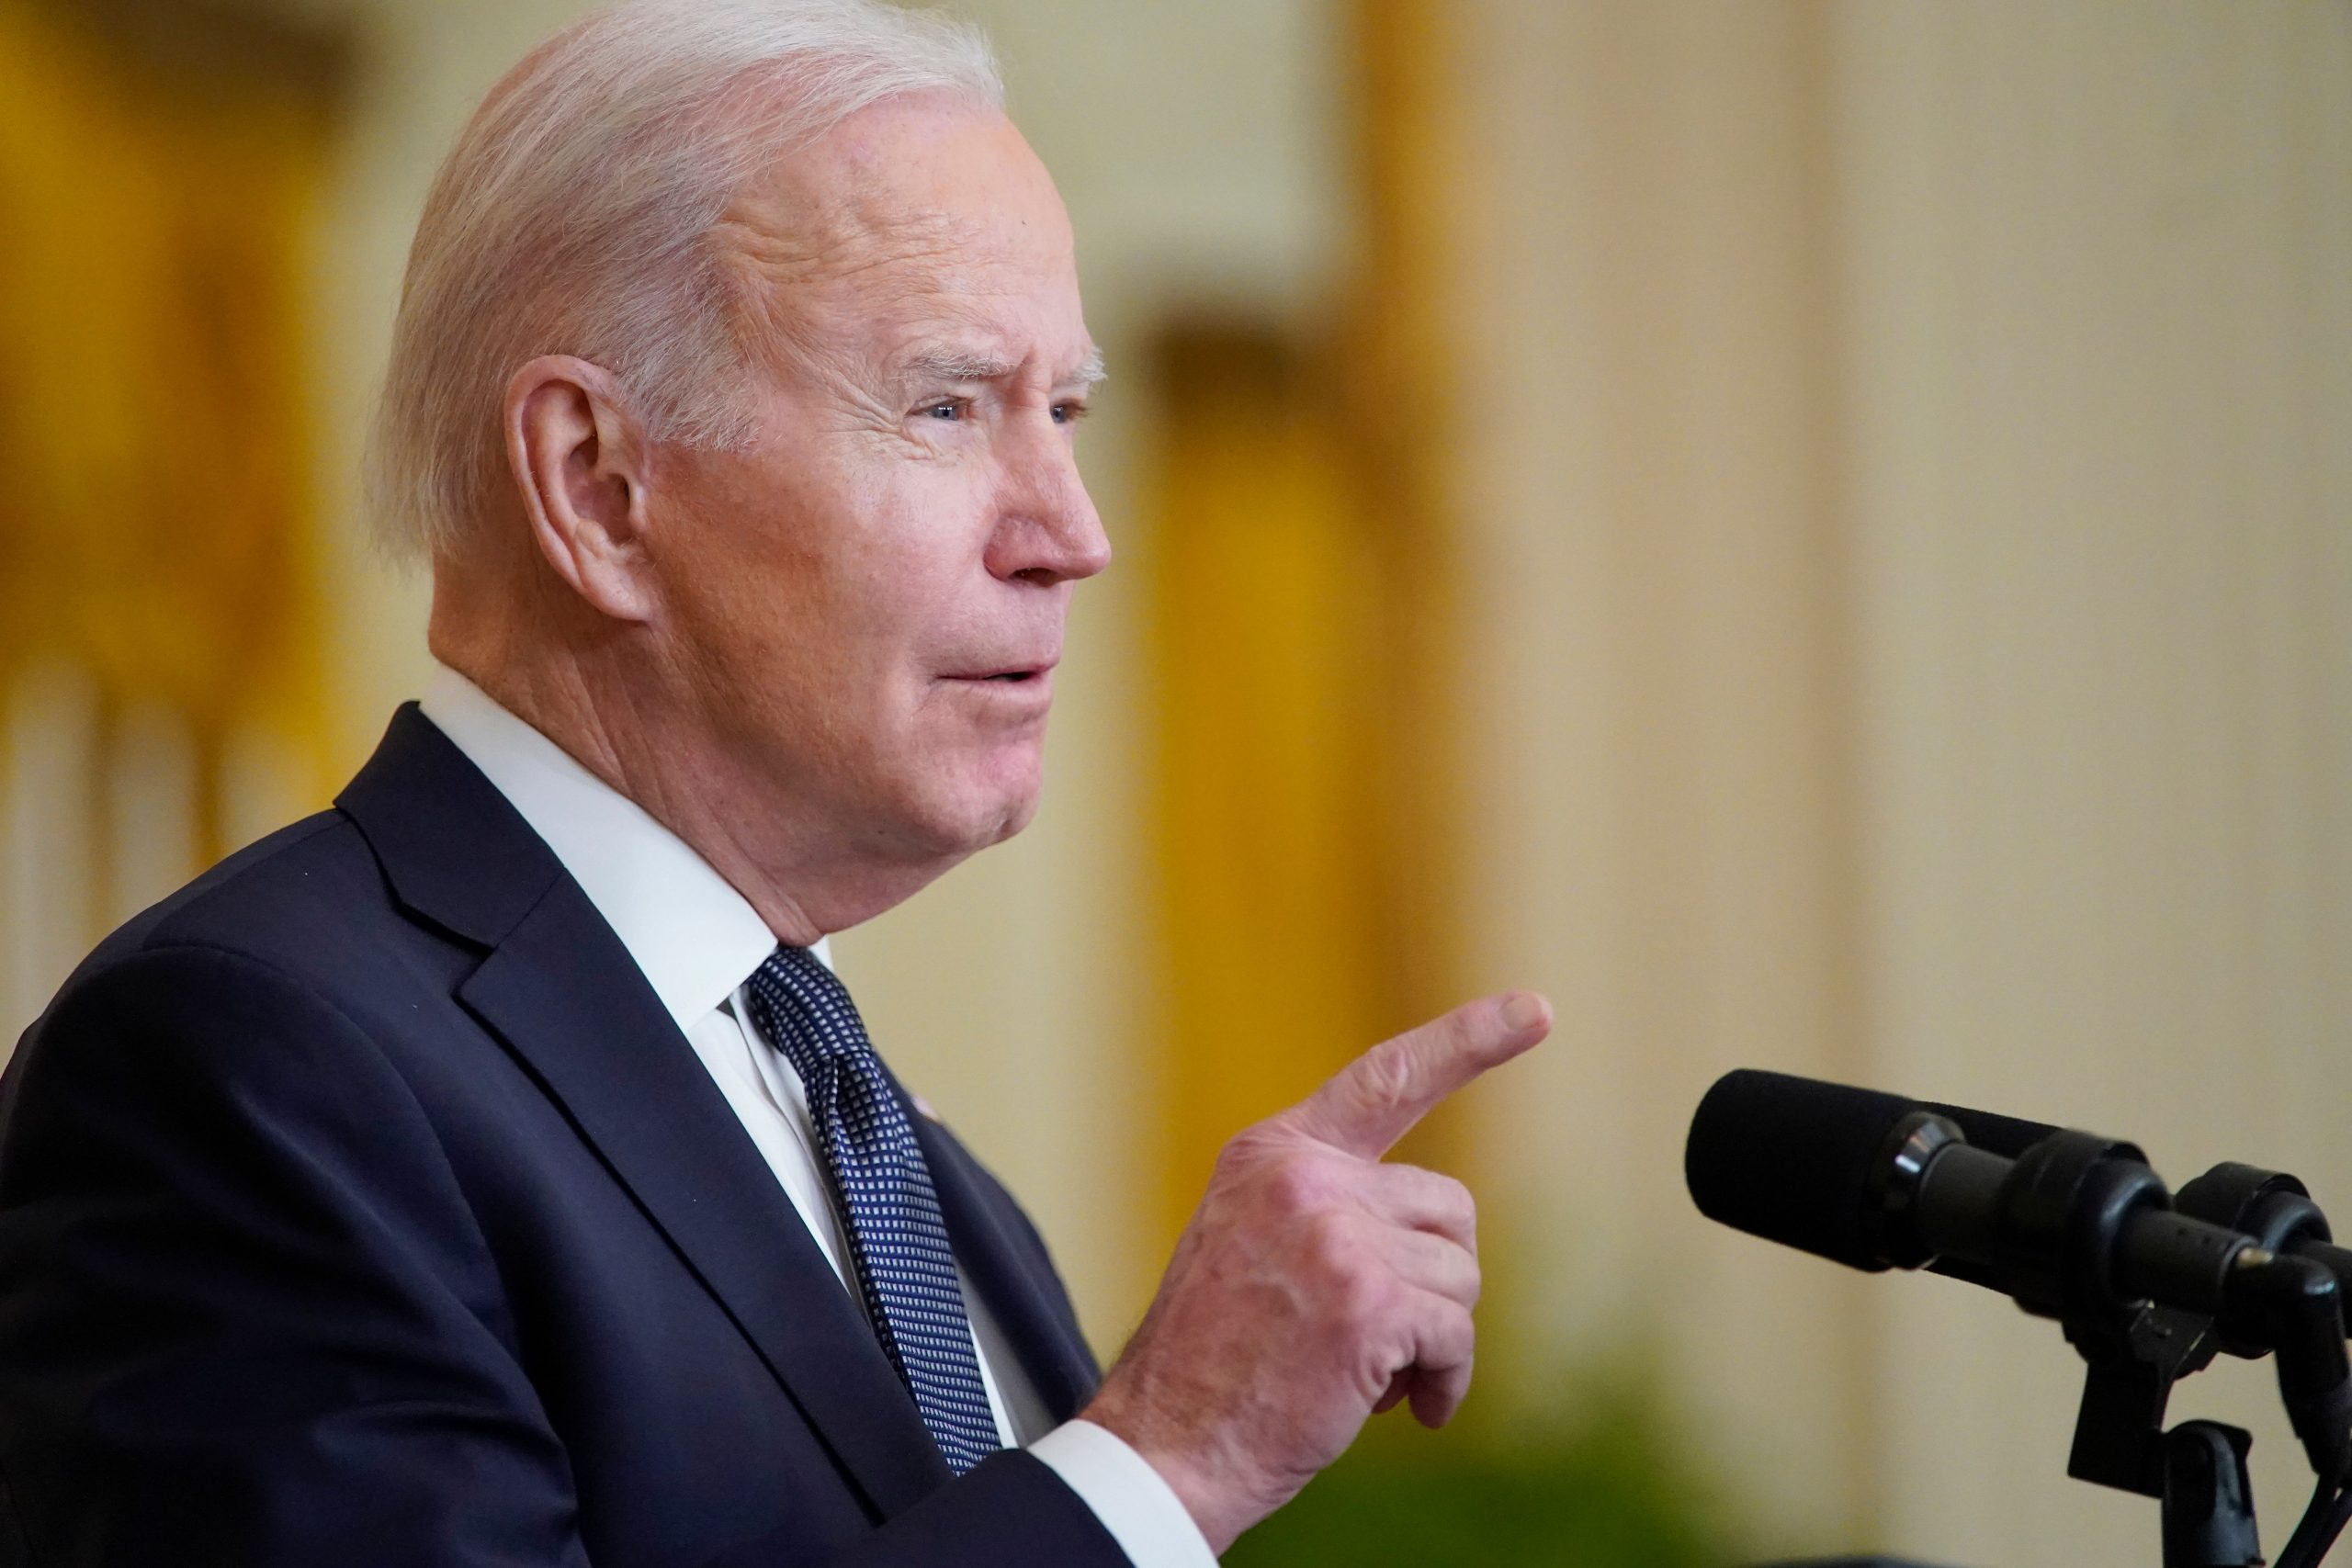 Putin has failed: Biden reaffirms NATO’s commitments, support to Ukraine